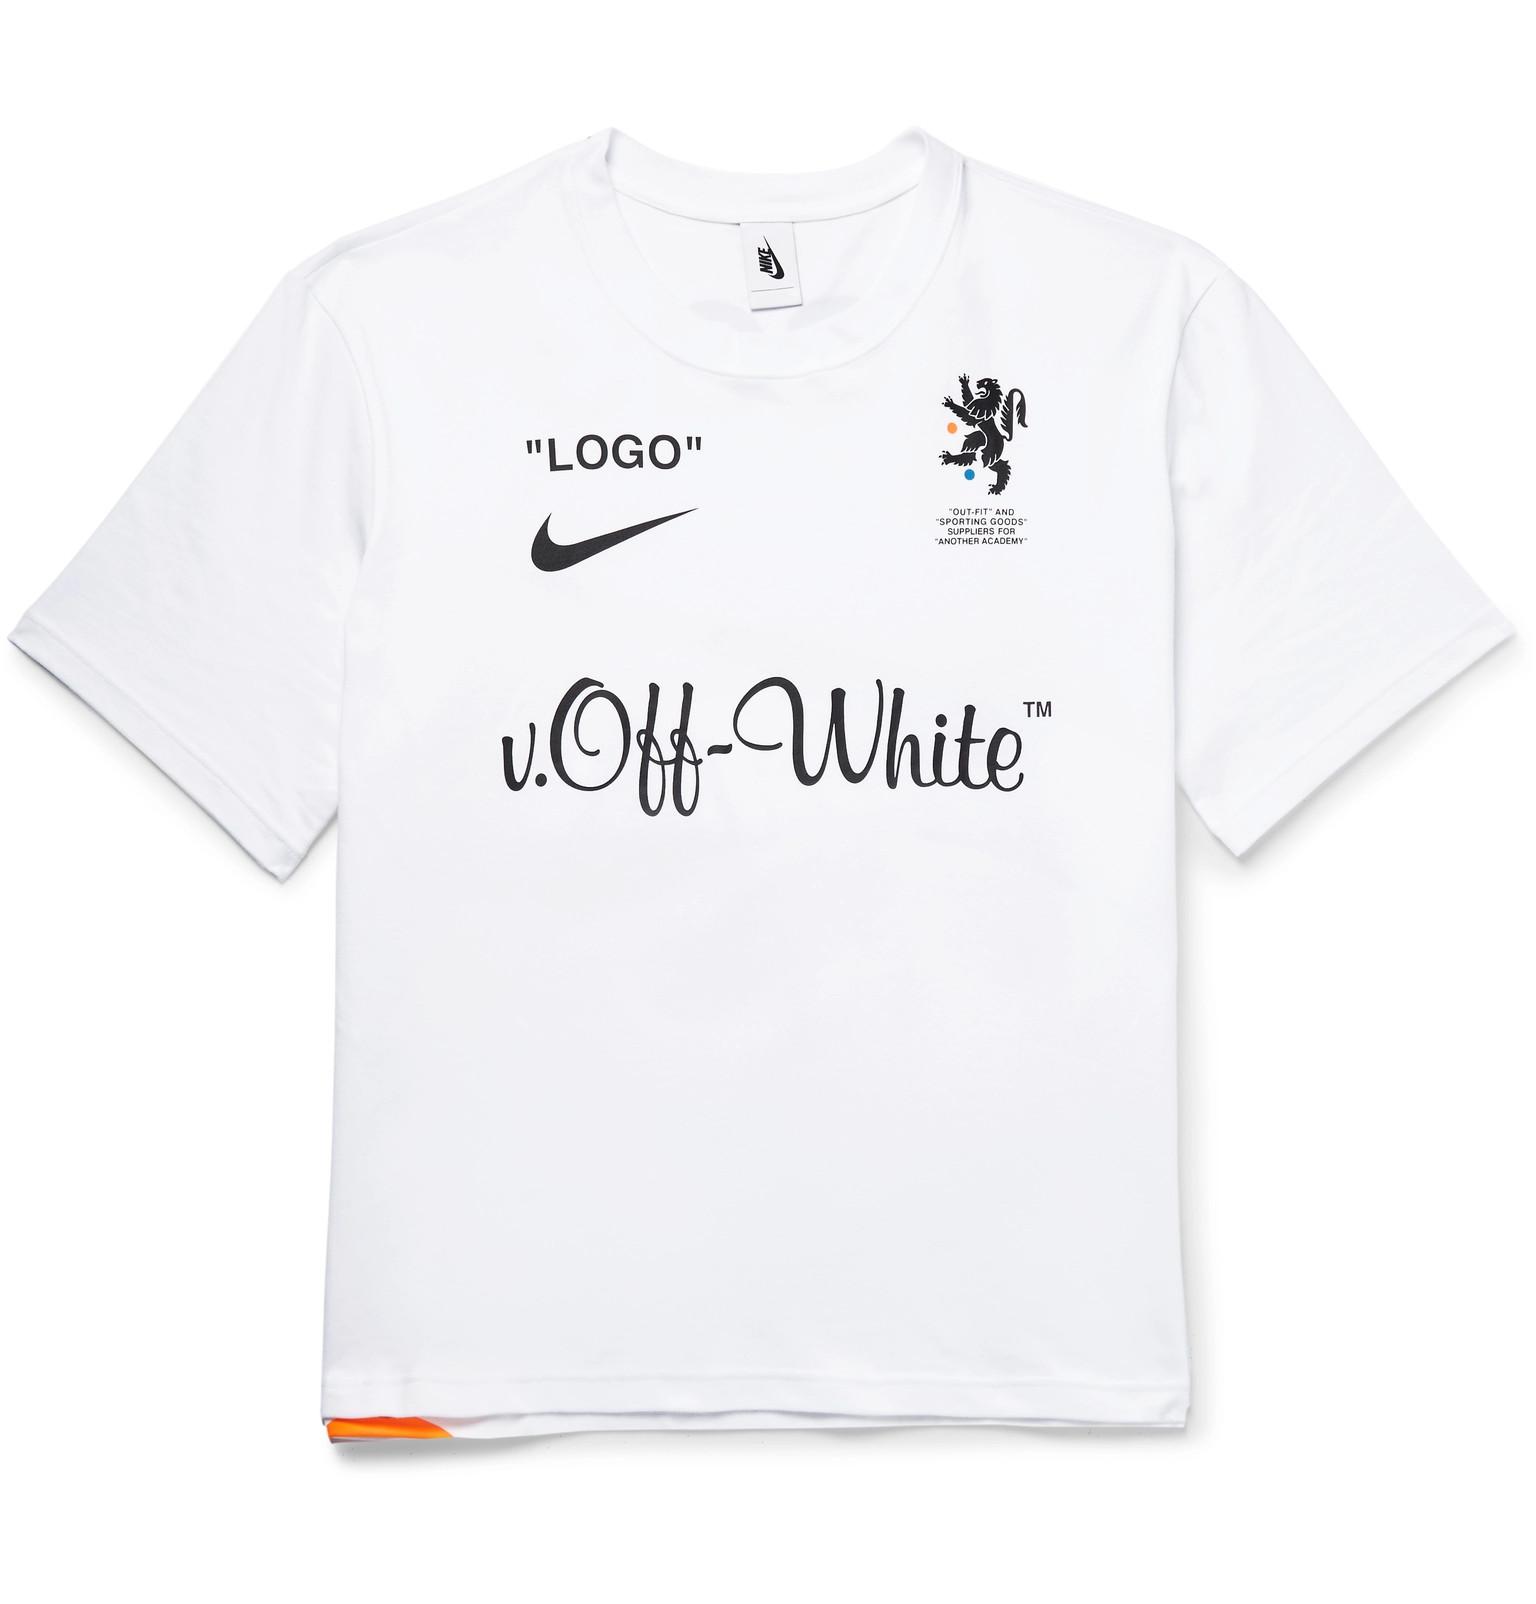 nike white cotton t shirt